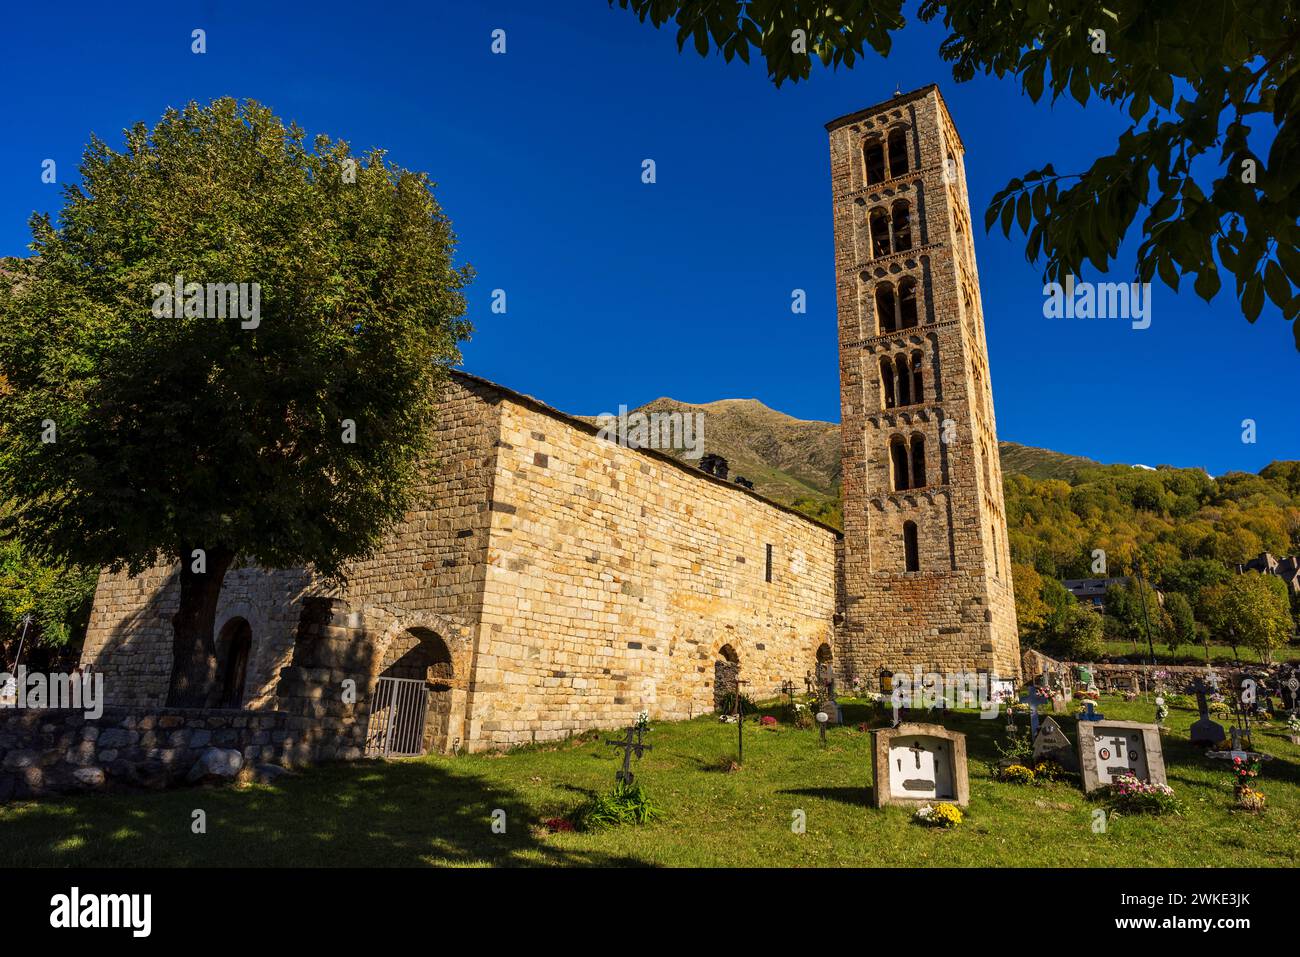 Sant Climent de Taüll, Bohí Valley (La Vall de Boí) Catalan region of Alta Ribagorza, province of Lérida, Spain. Stock Photo